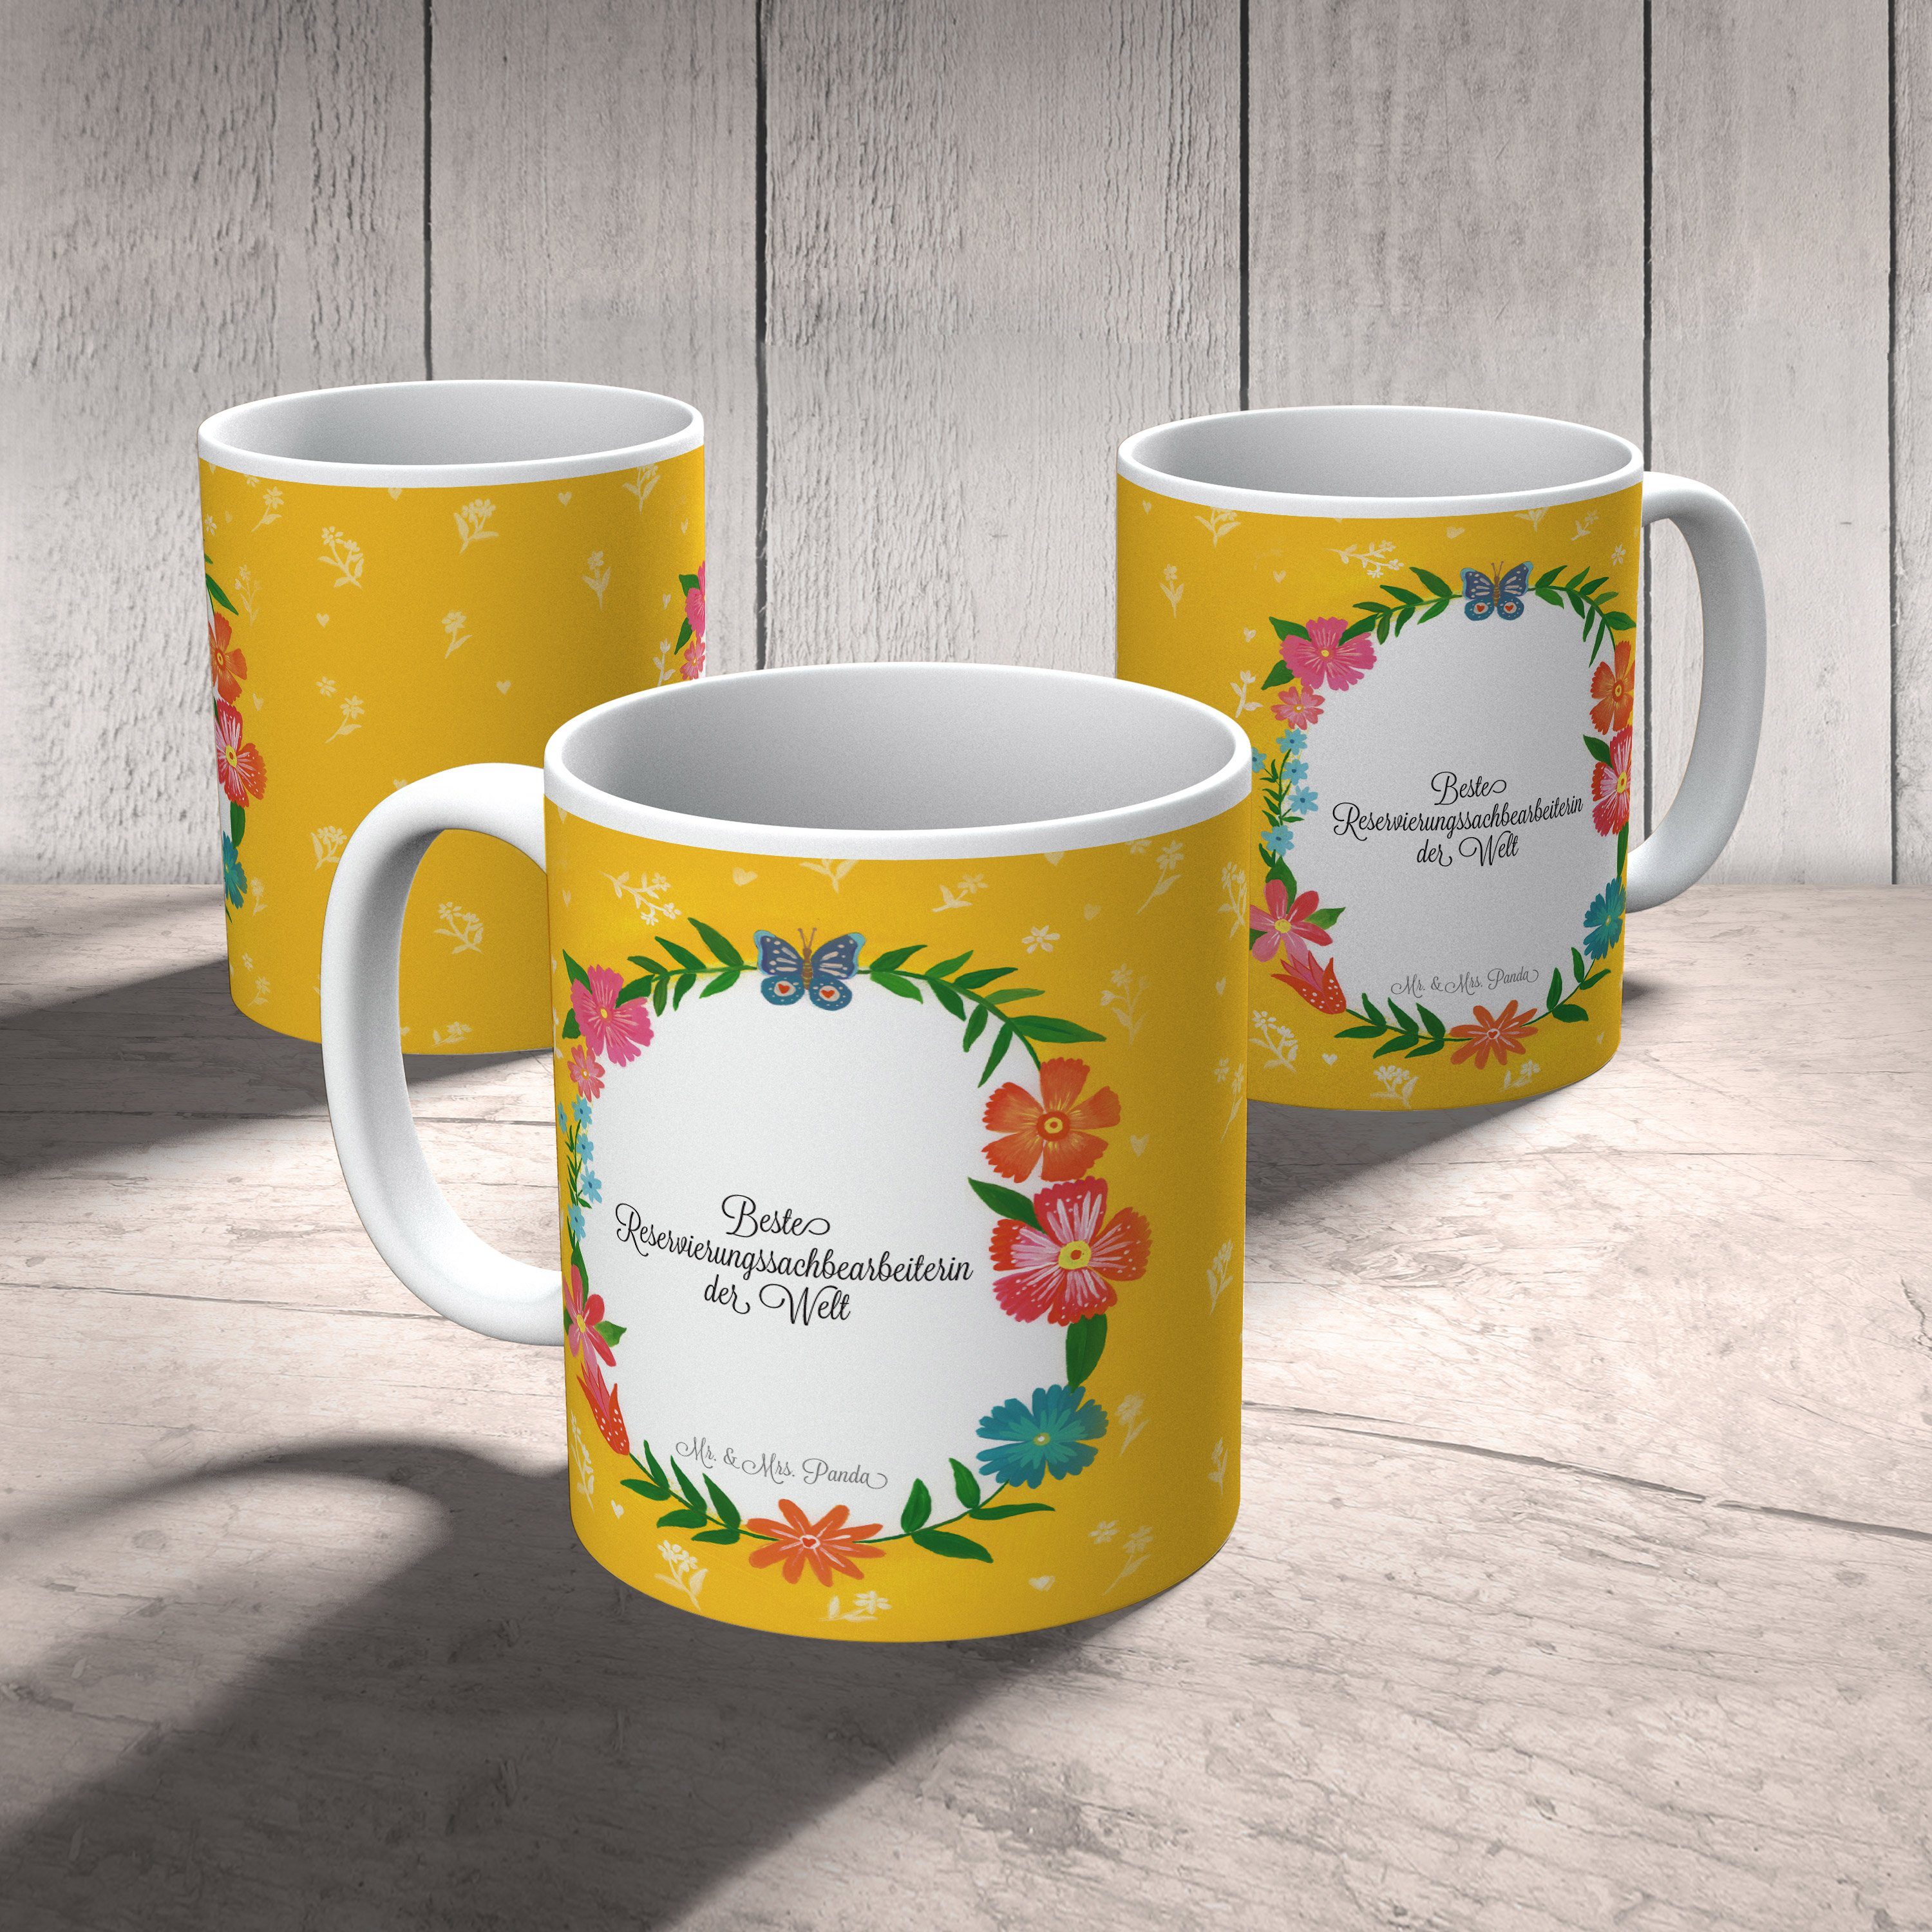 Mr. & Mrs. Tasse Geschenk, Panda Kaffeetasse, Keramik - B, Reservierungssachbearbeiterin Gratulation